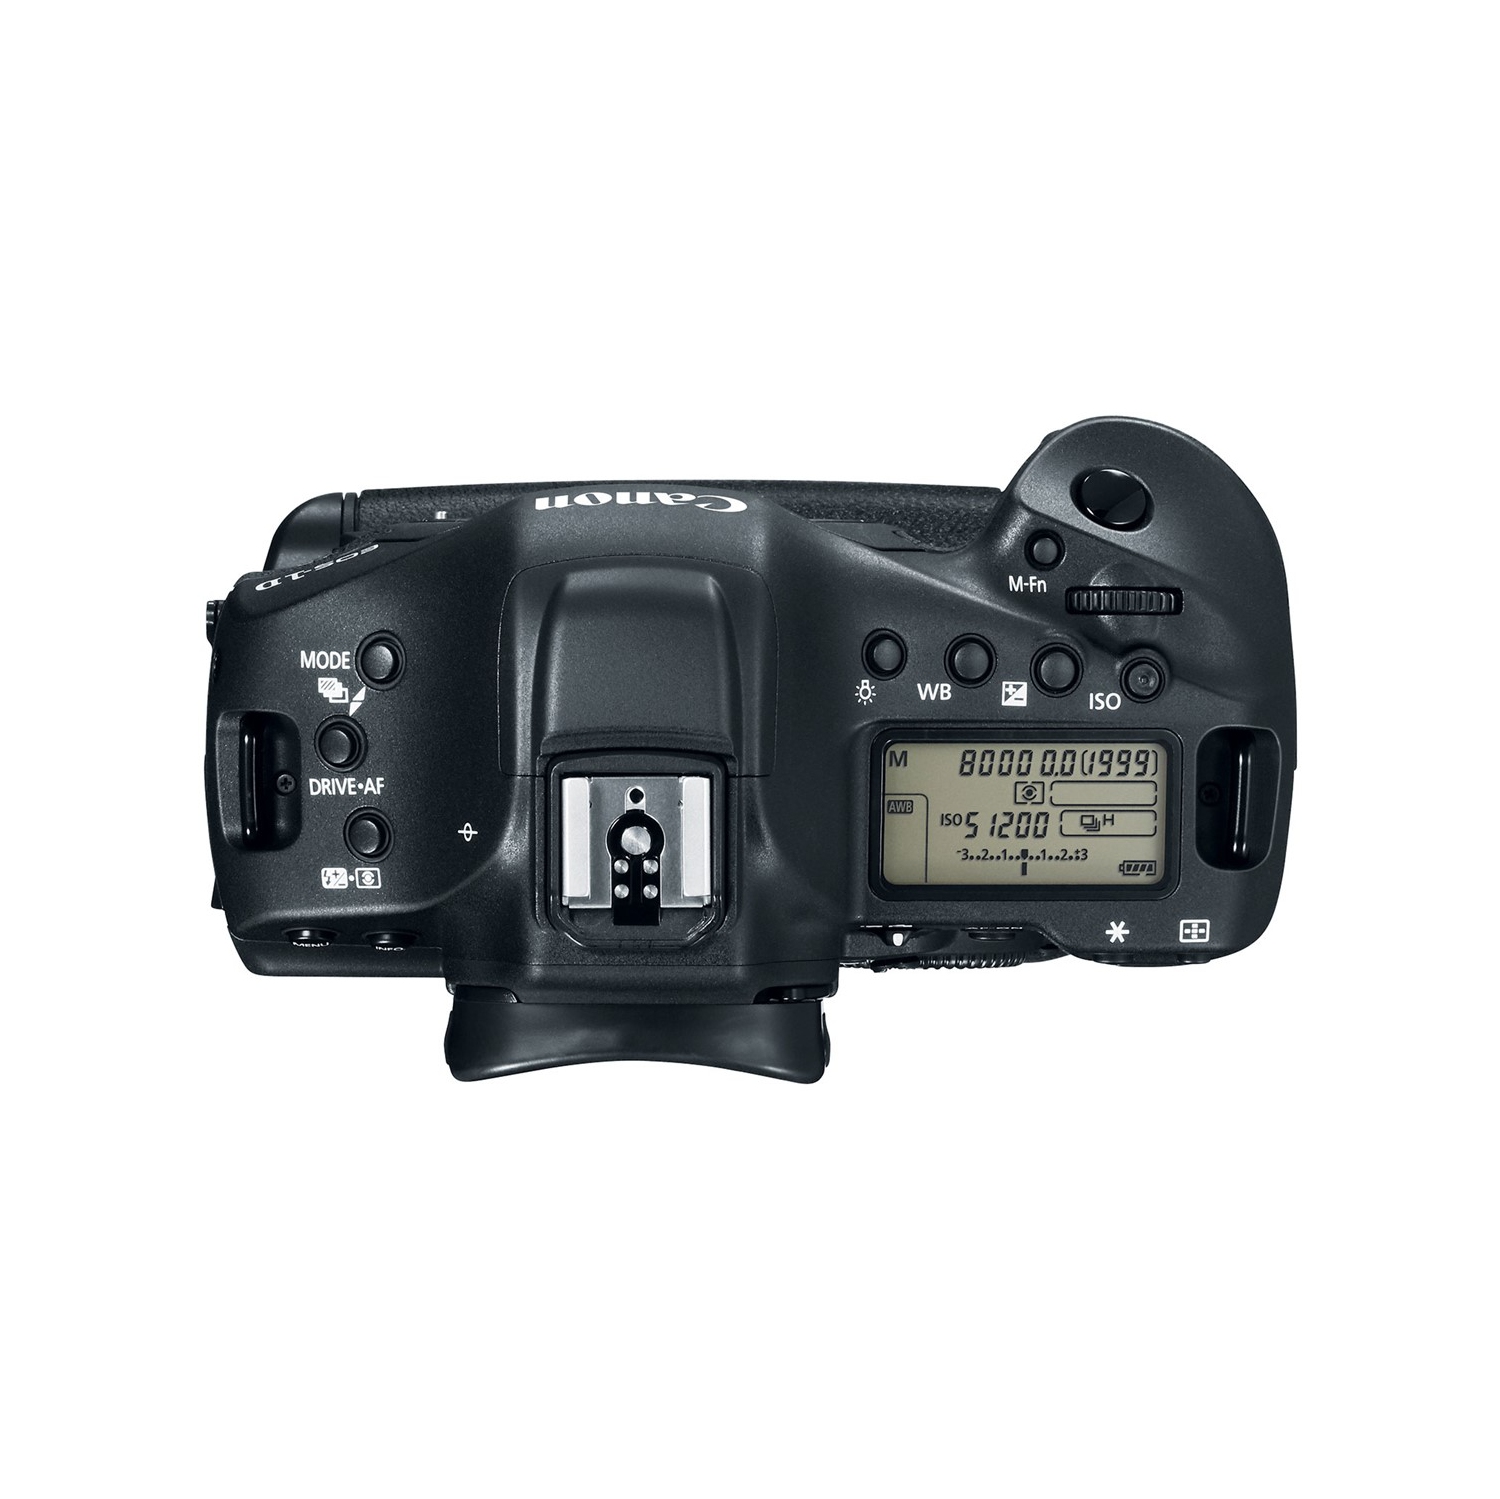 Canon Eos-1D X Mark II Digital SLR Camera -Bundle with 128GB 